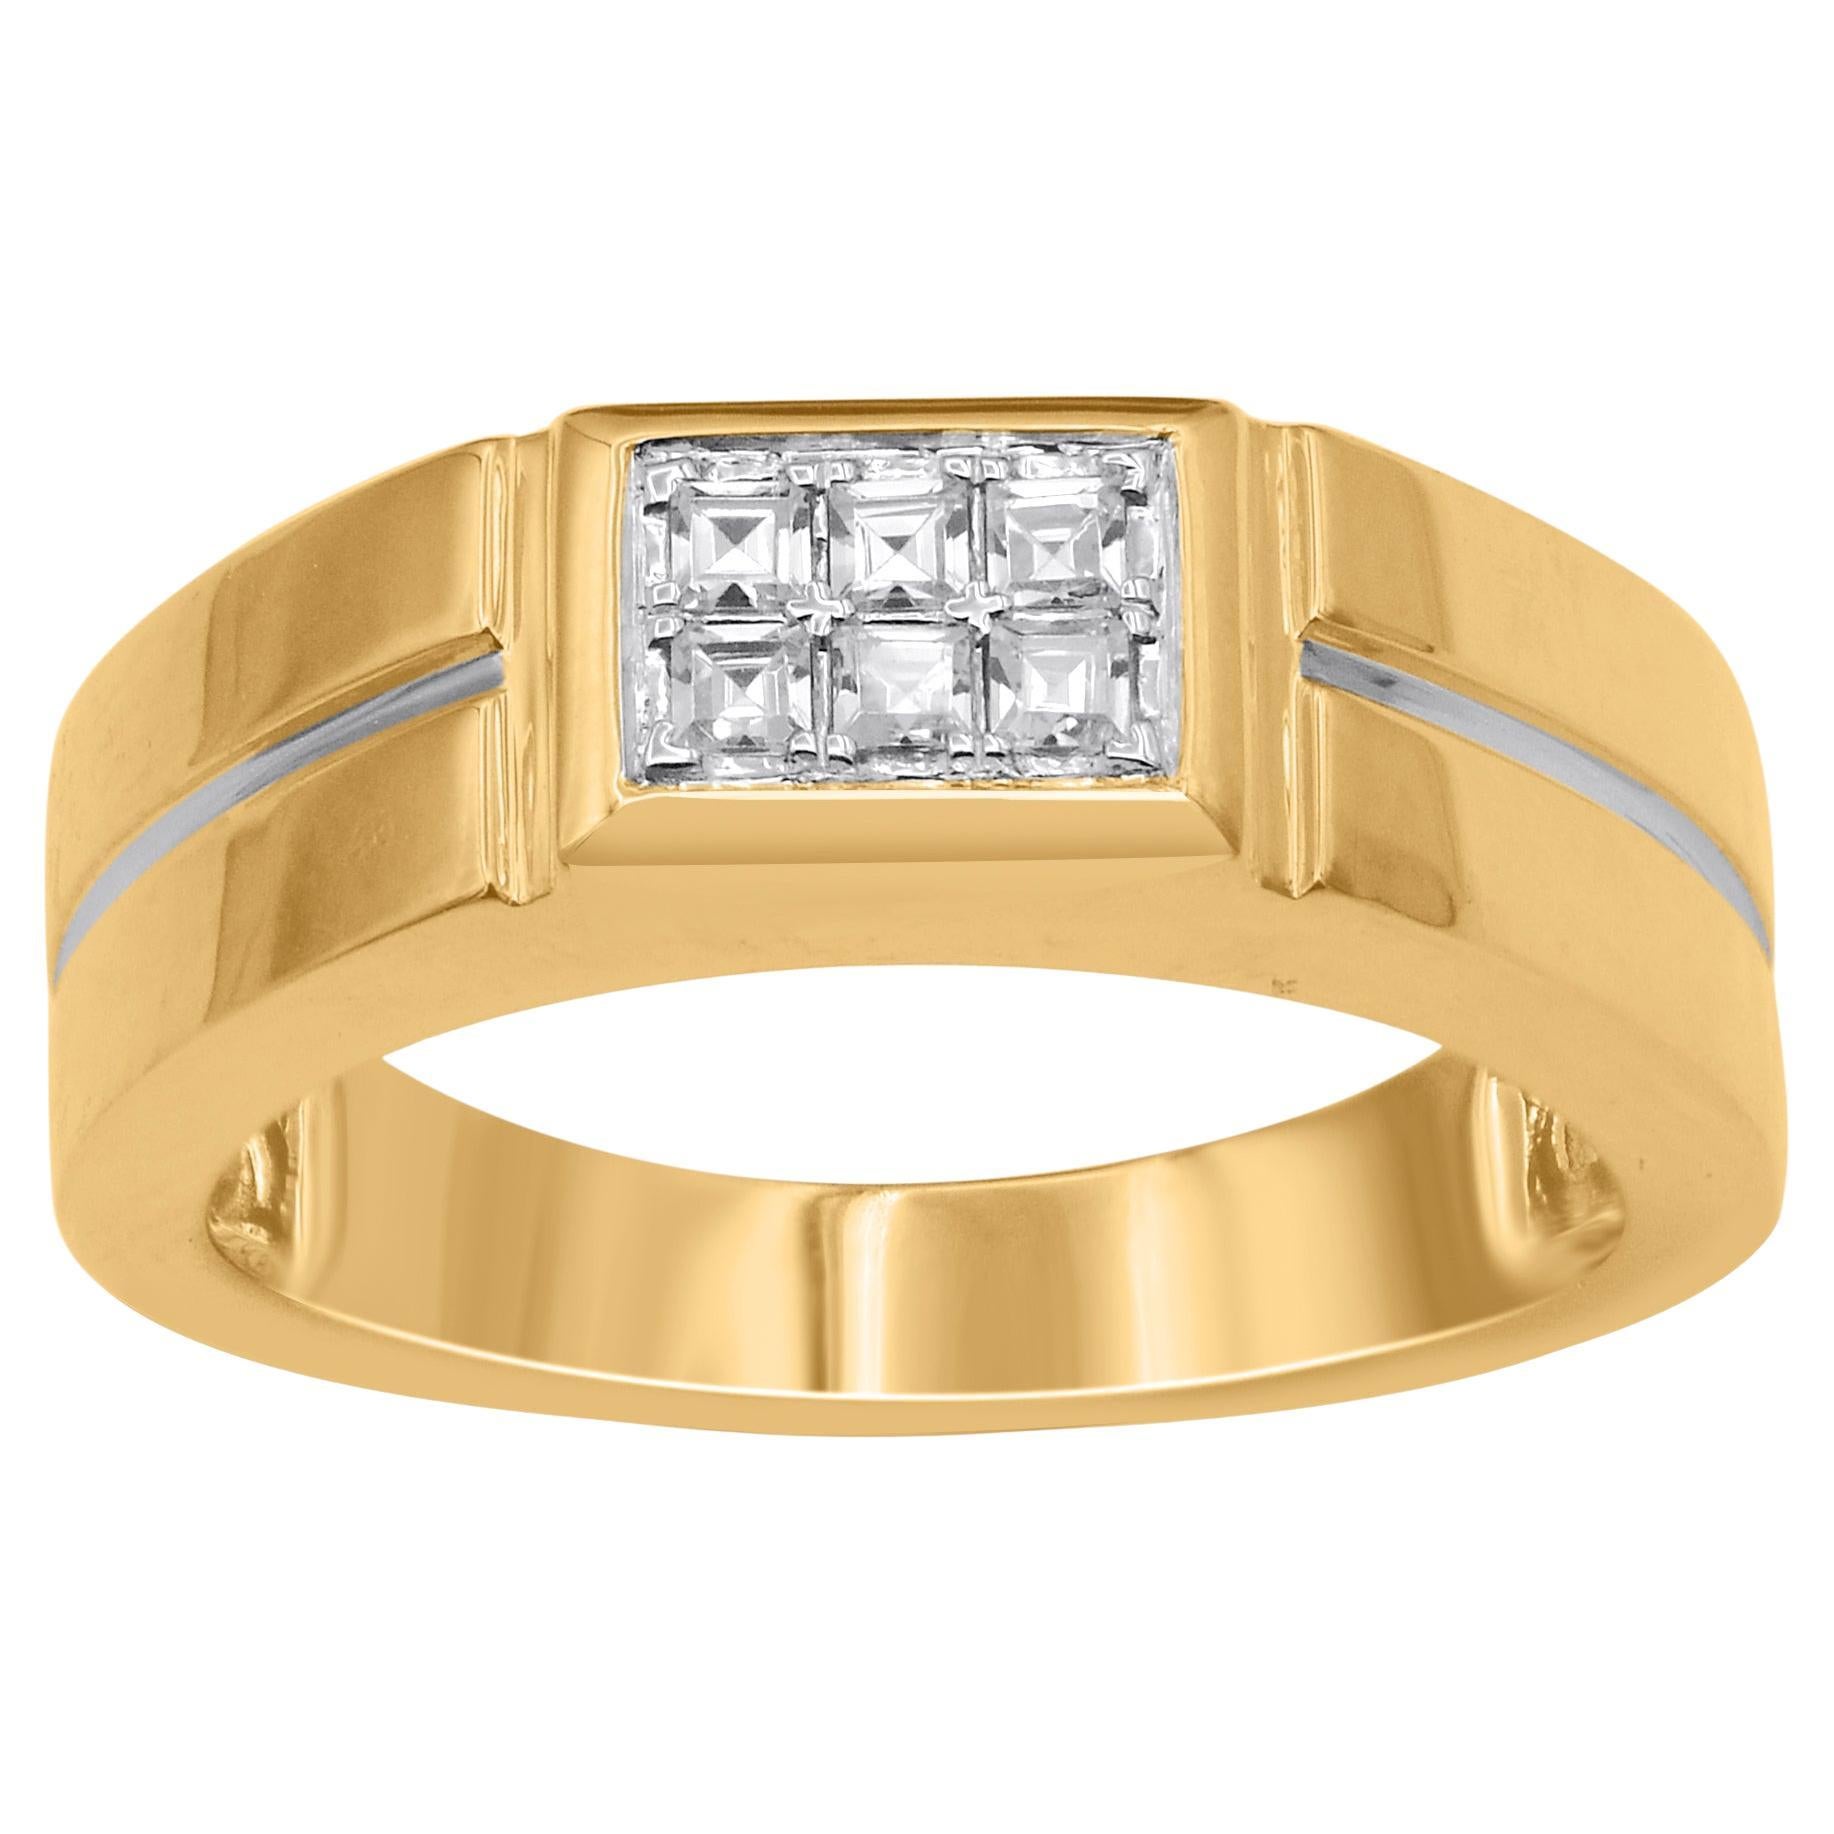 TJD 0.30 Carat Princess Cut Diamond 18KT Yellow Gold Men's Wedding Band Ring For Sale